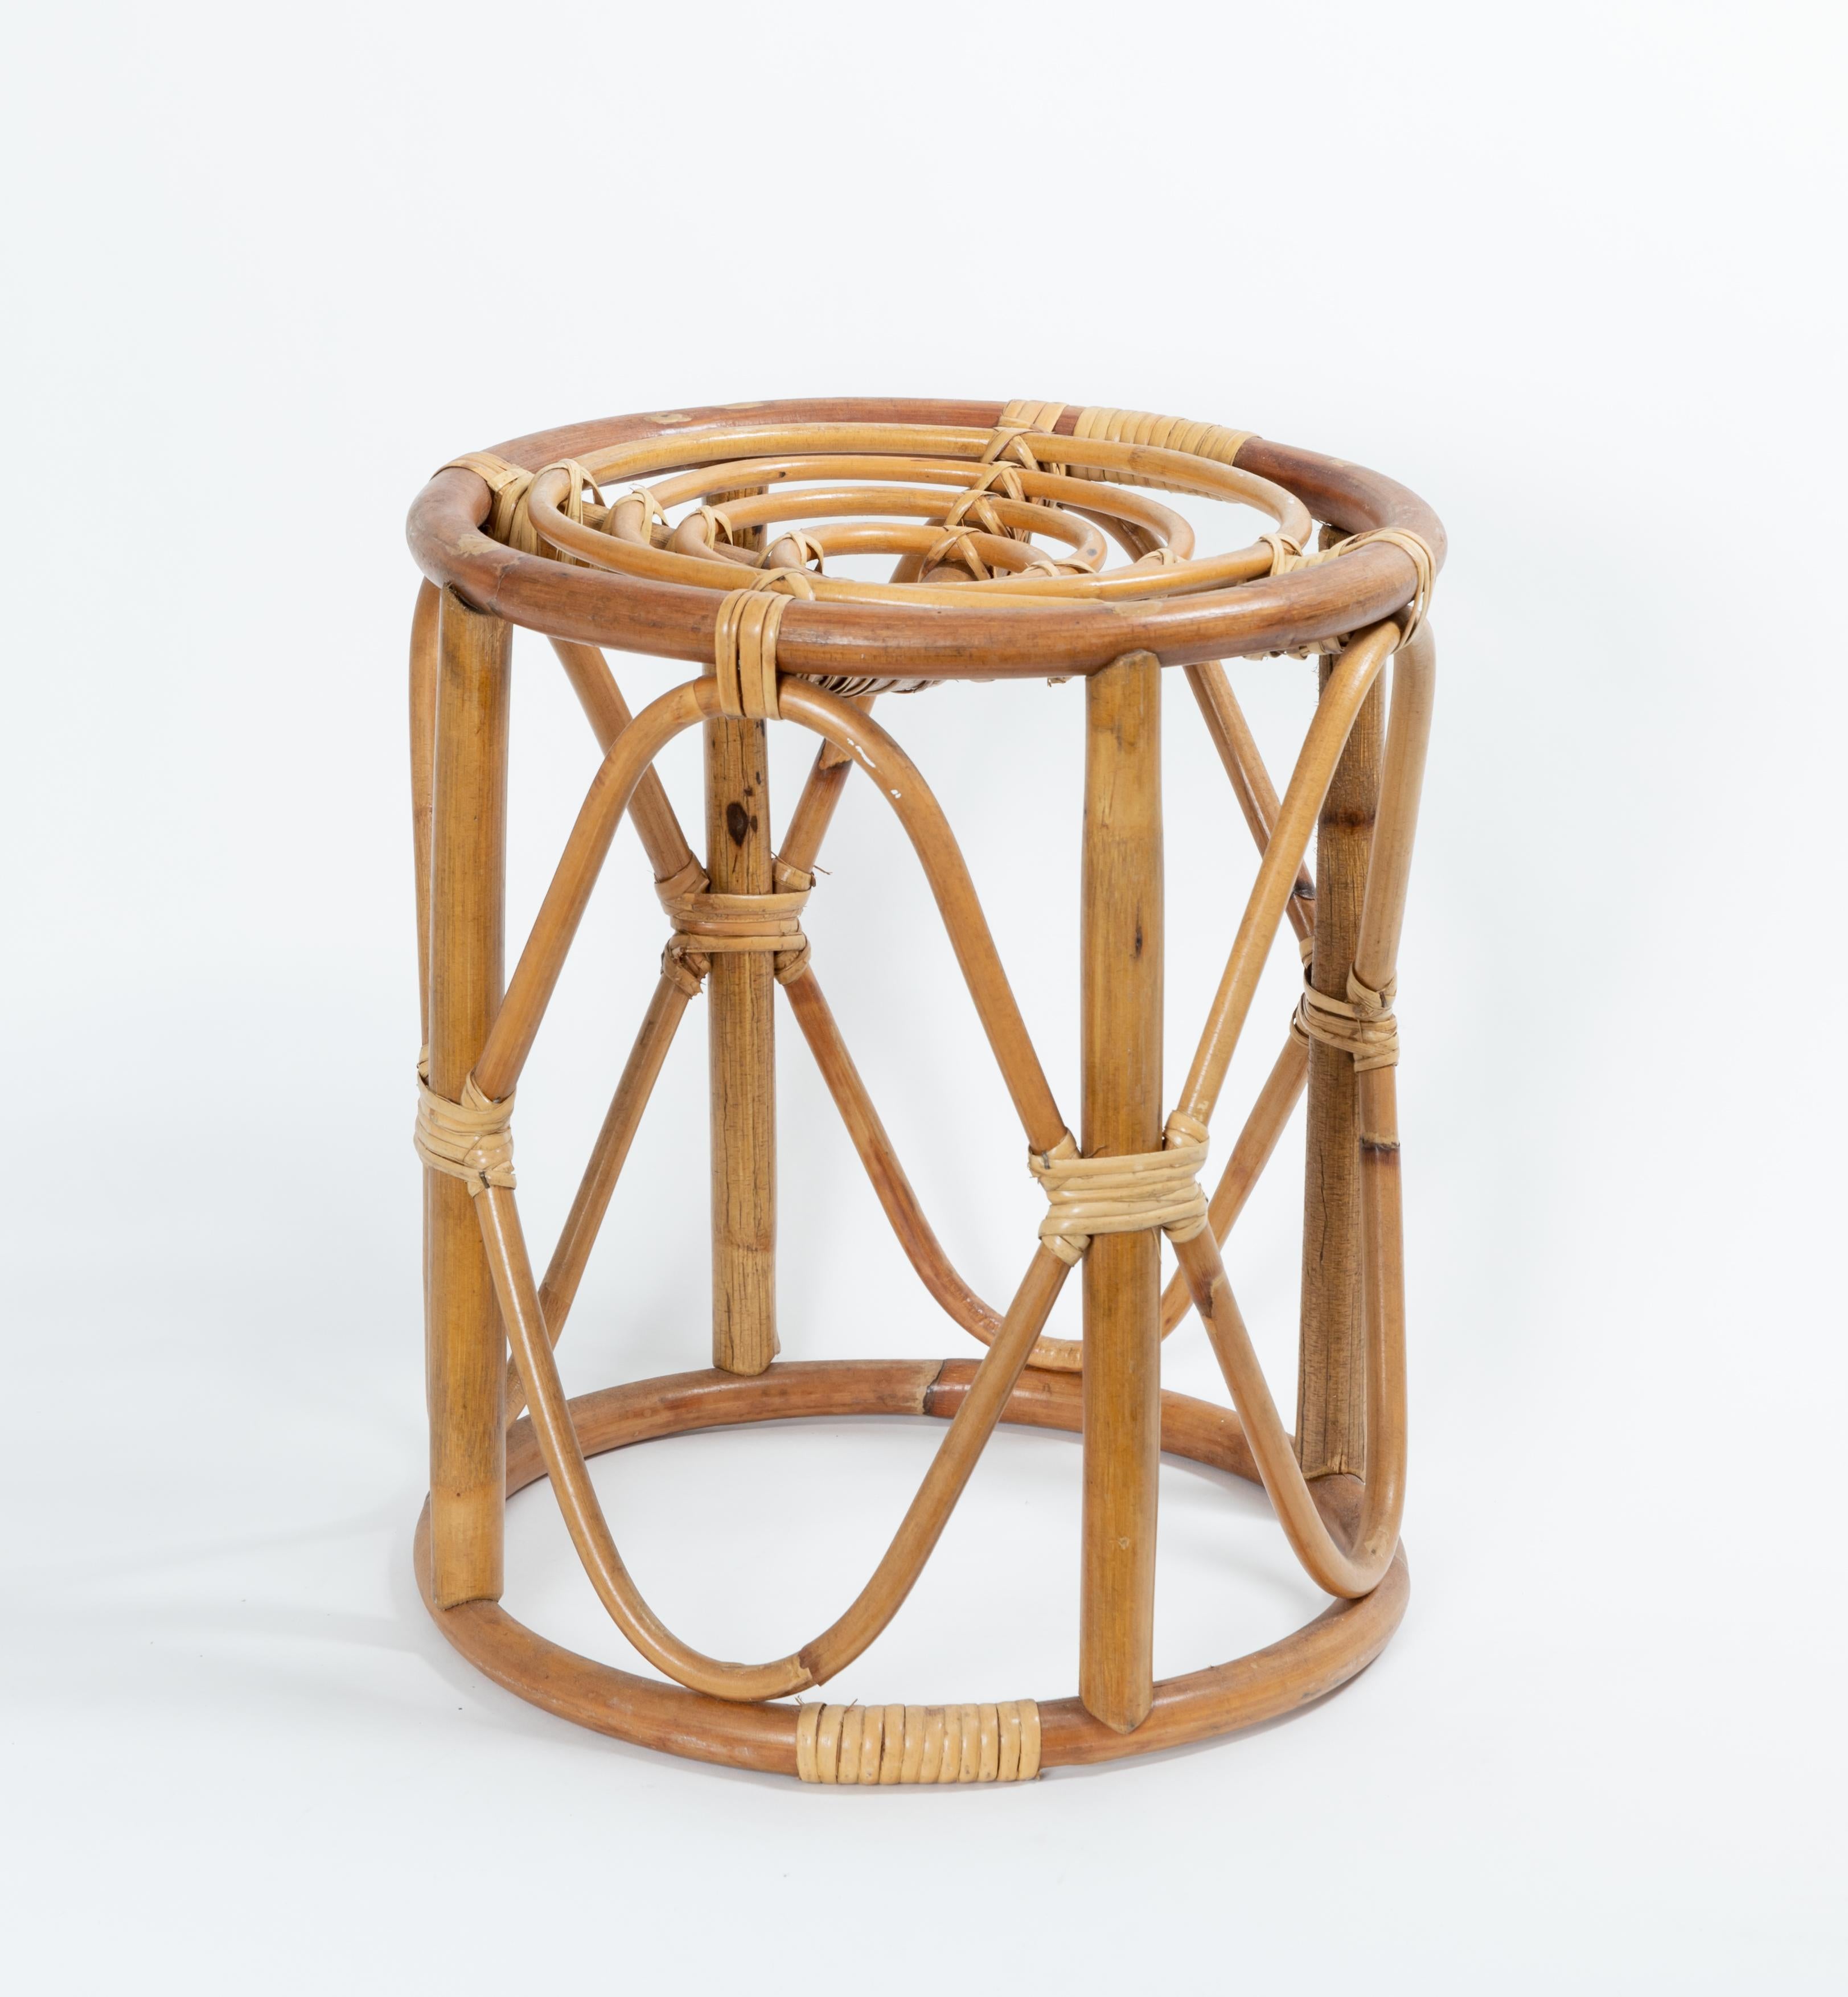 Set of three stacking bamboo stools
Measures: Large: 17.5